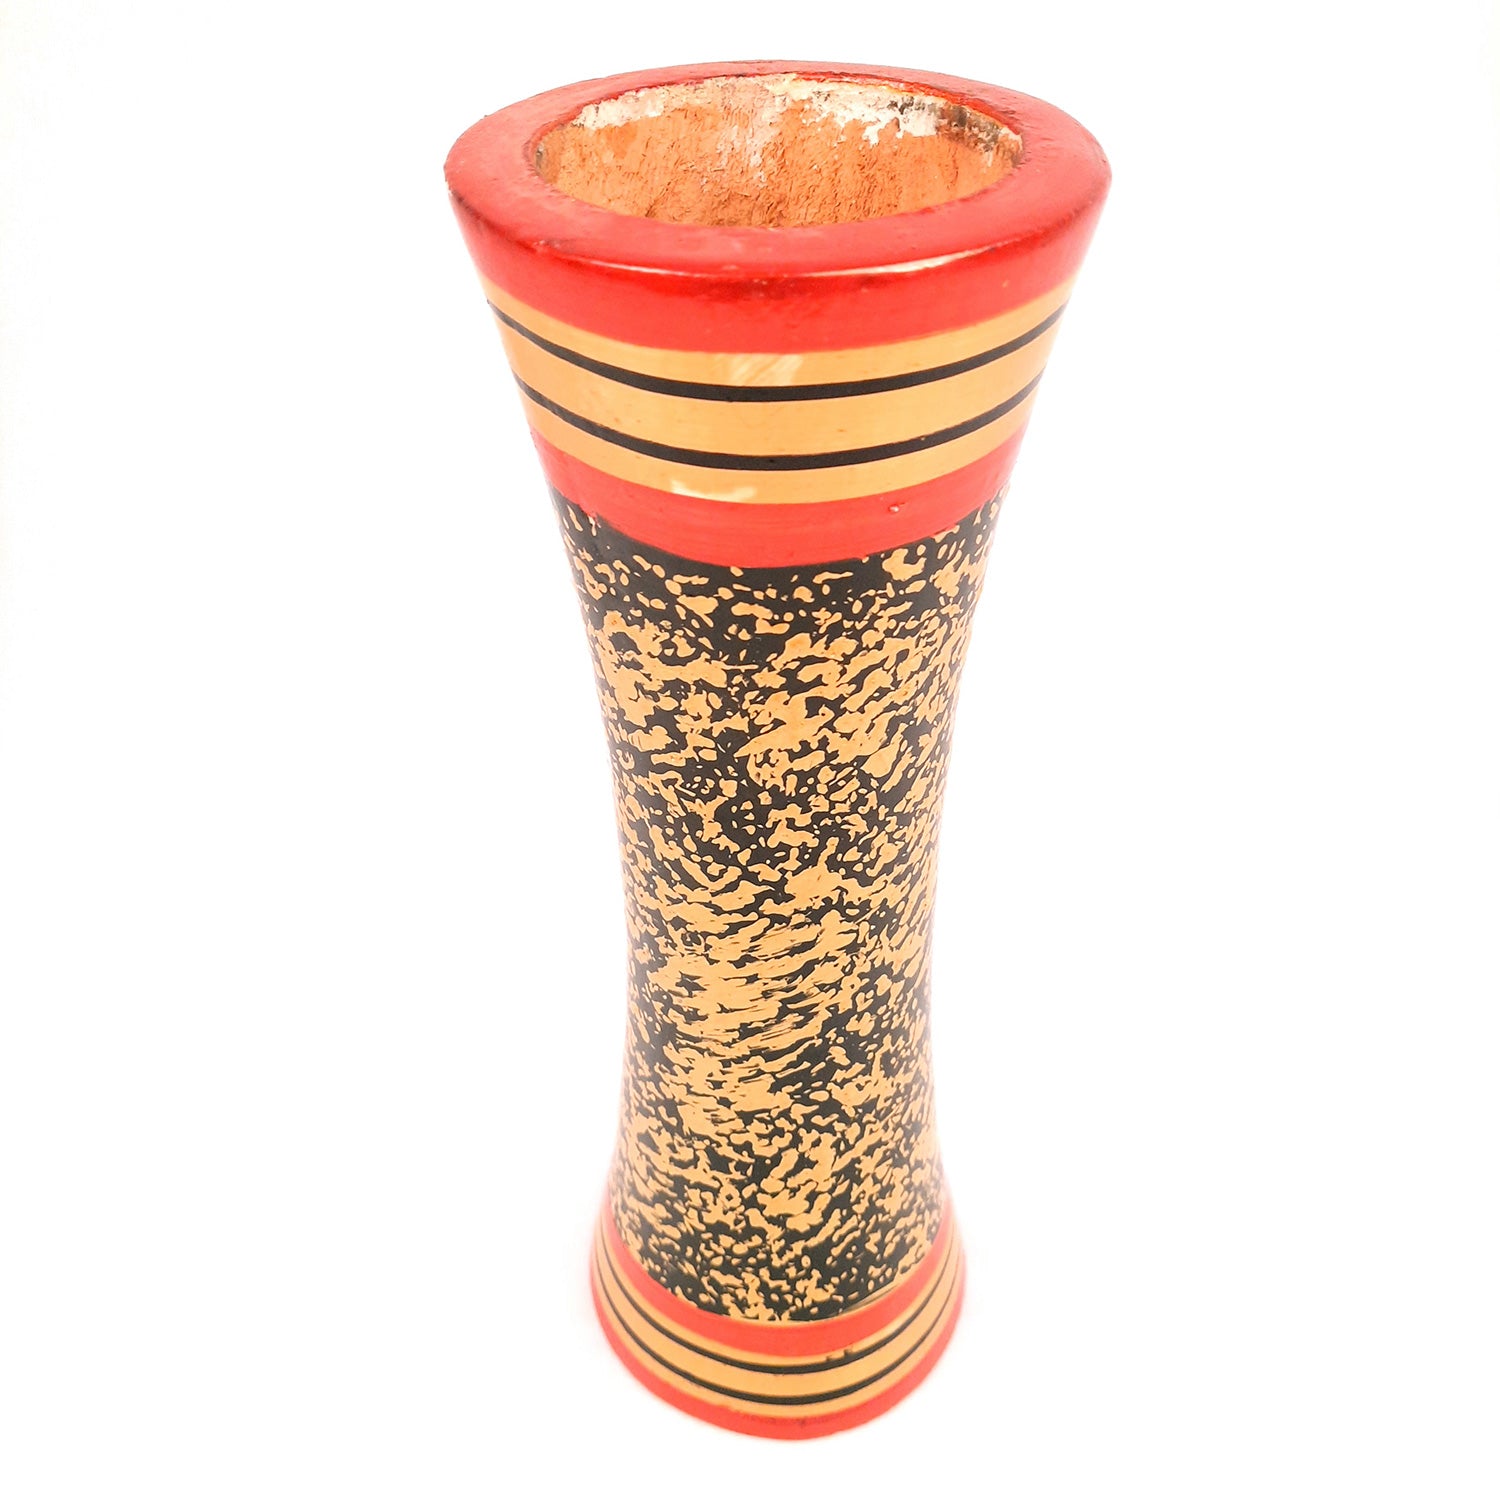 Flower Pot | Vase - Wooden - for Home Decoration, Living Room, Table, Shelf, Office & Interior Decor | House Warming & Festival Gift  - 12 Inch